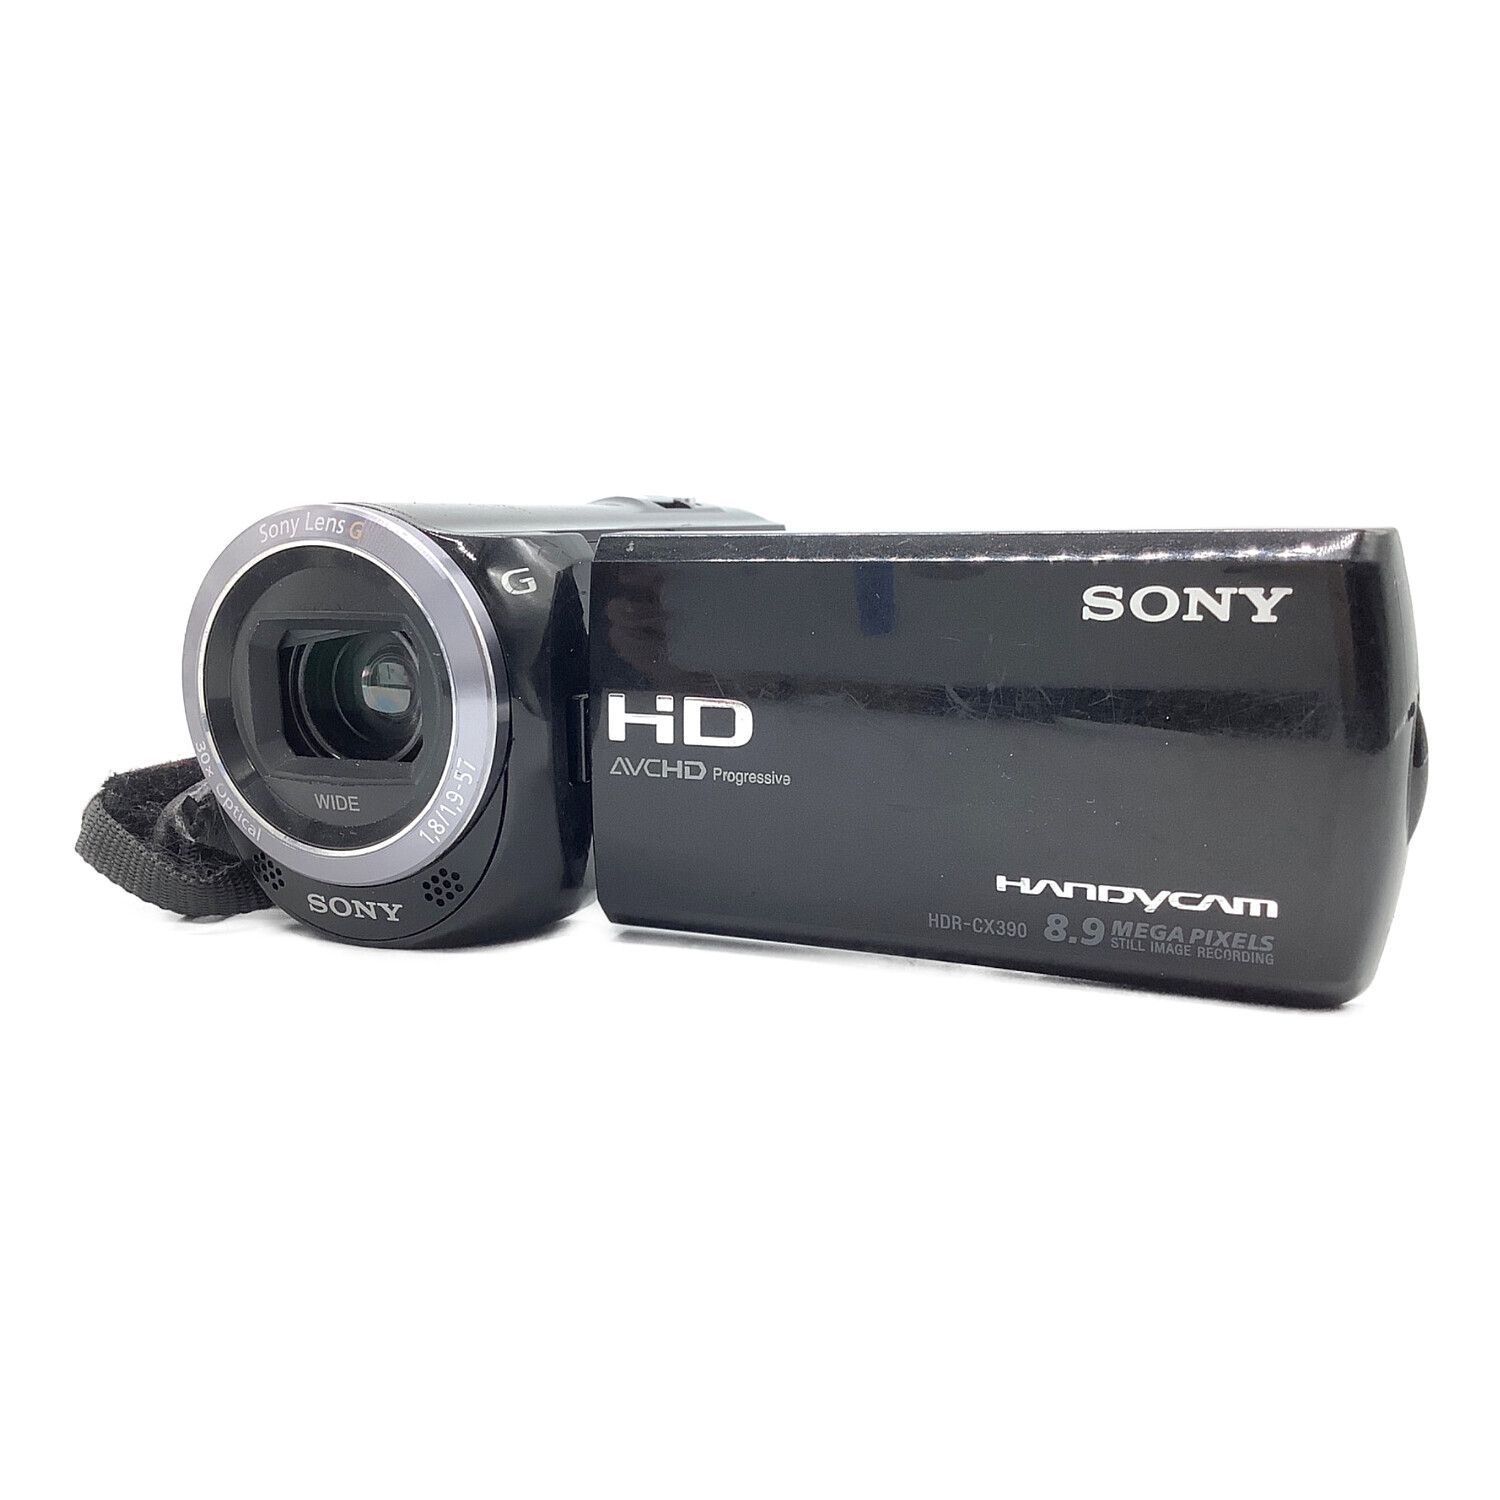 SONY (ソニー) デジタルビデオカメラ HDR-CX390 3075586｜トレファクONLINE